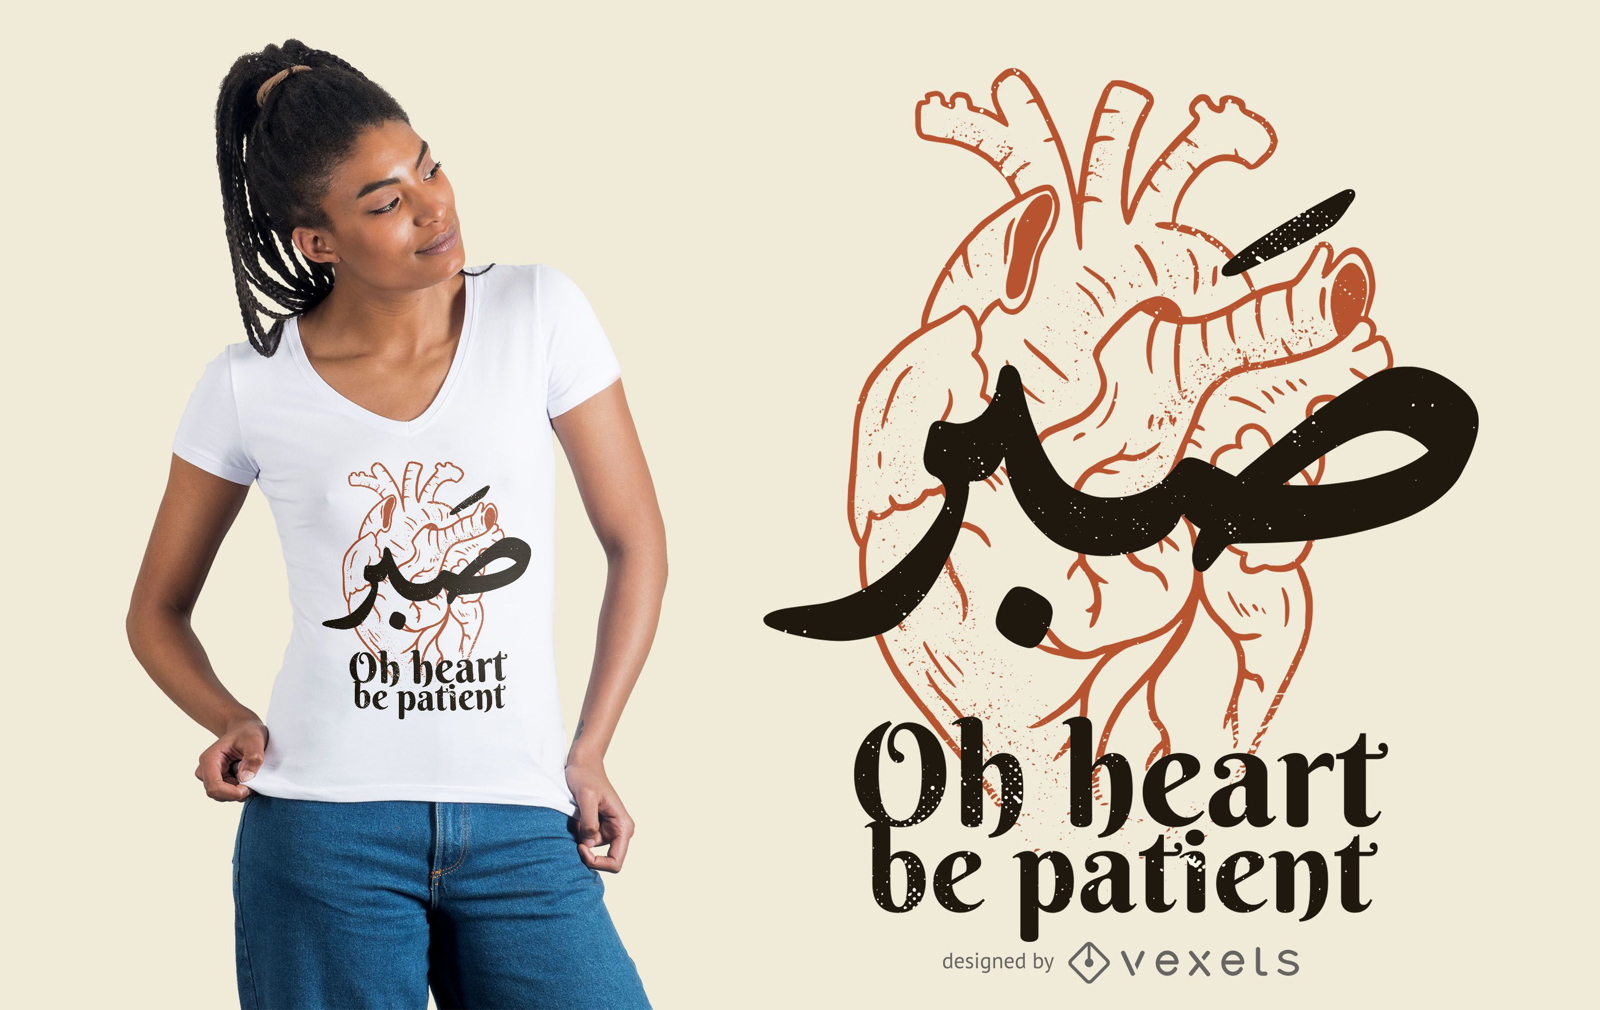 Heart be patient t-shirt design